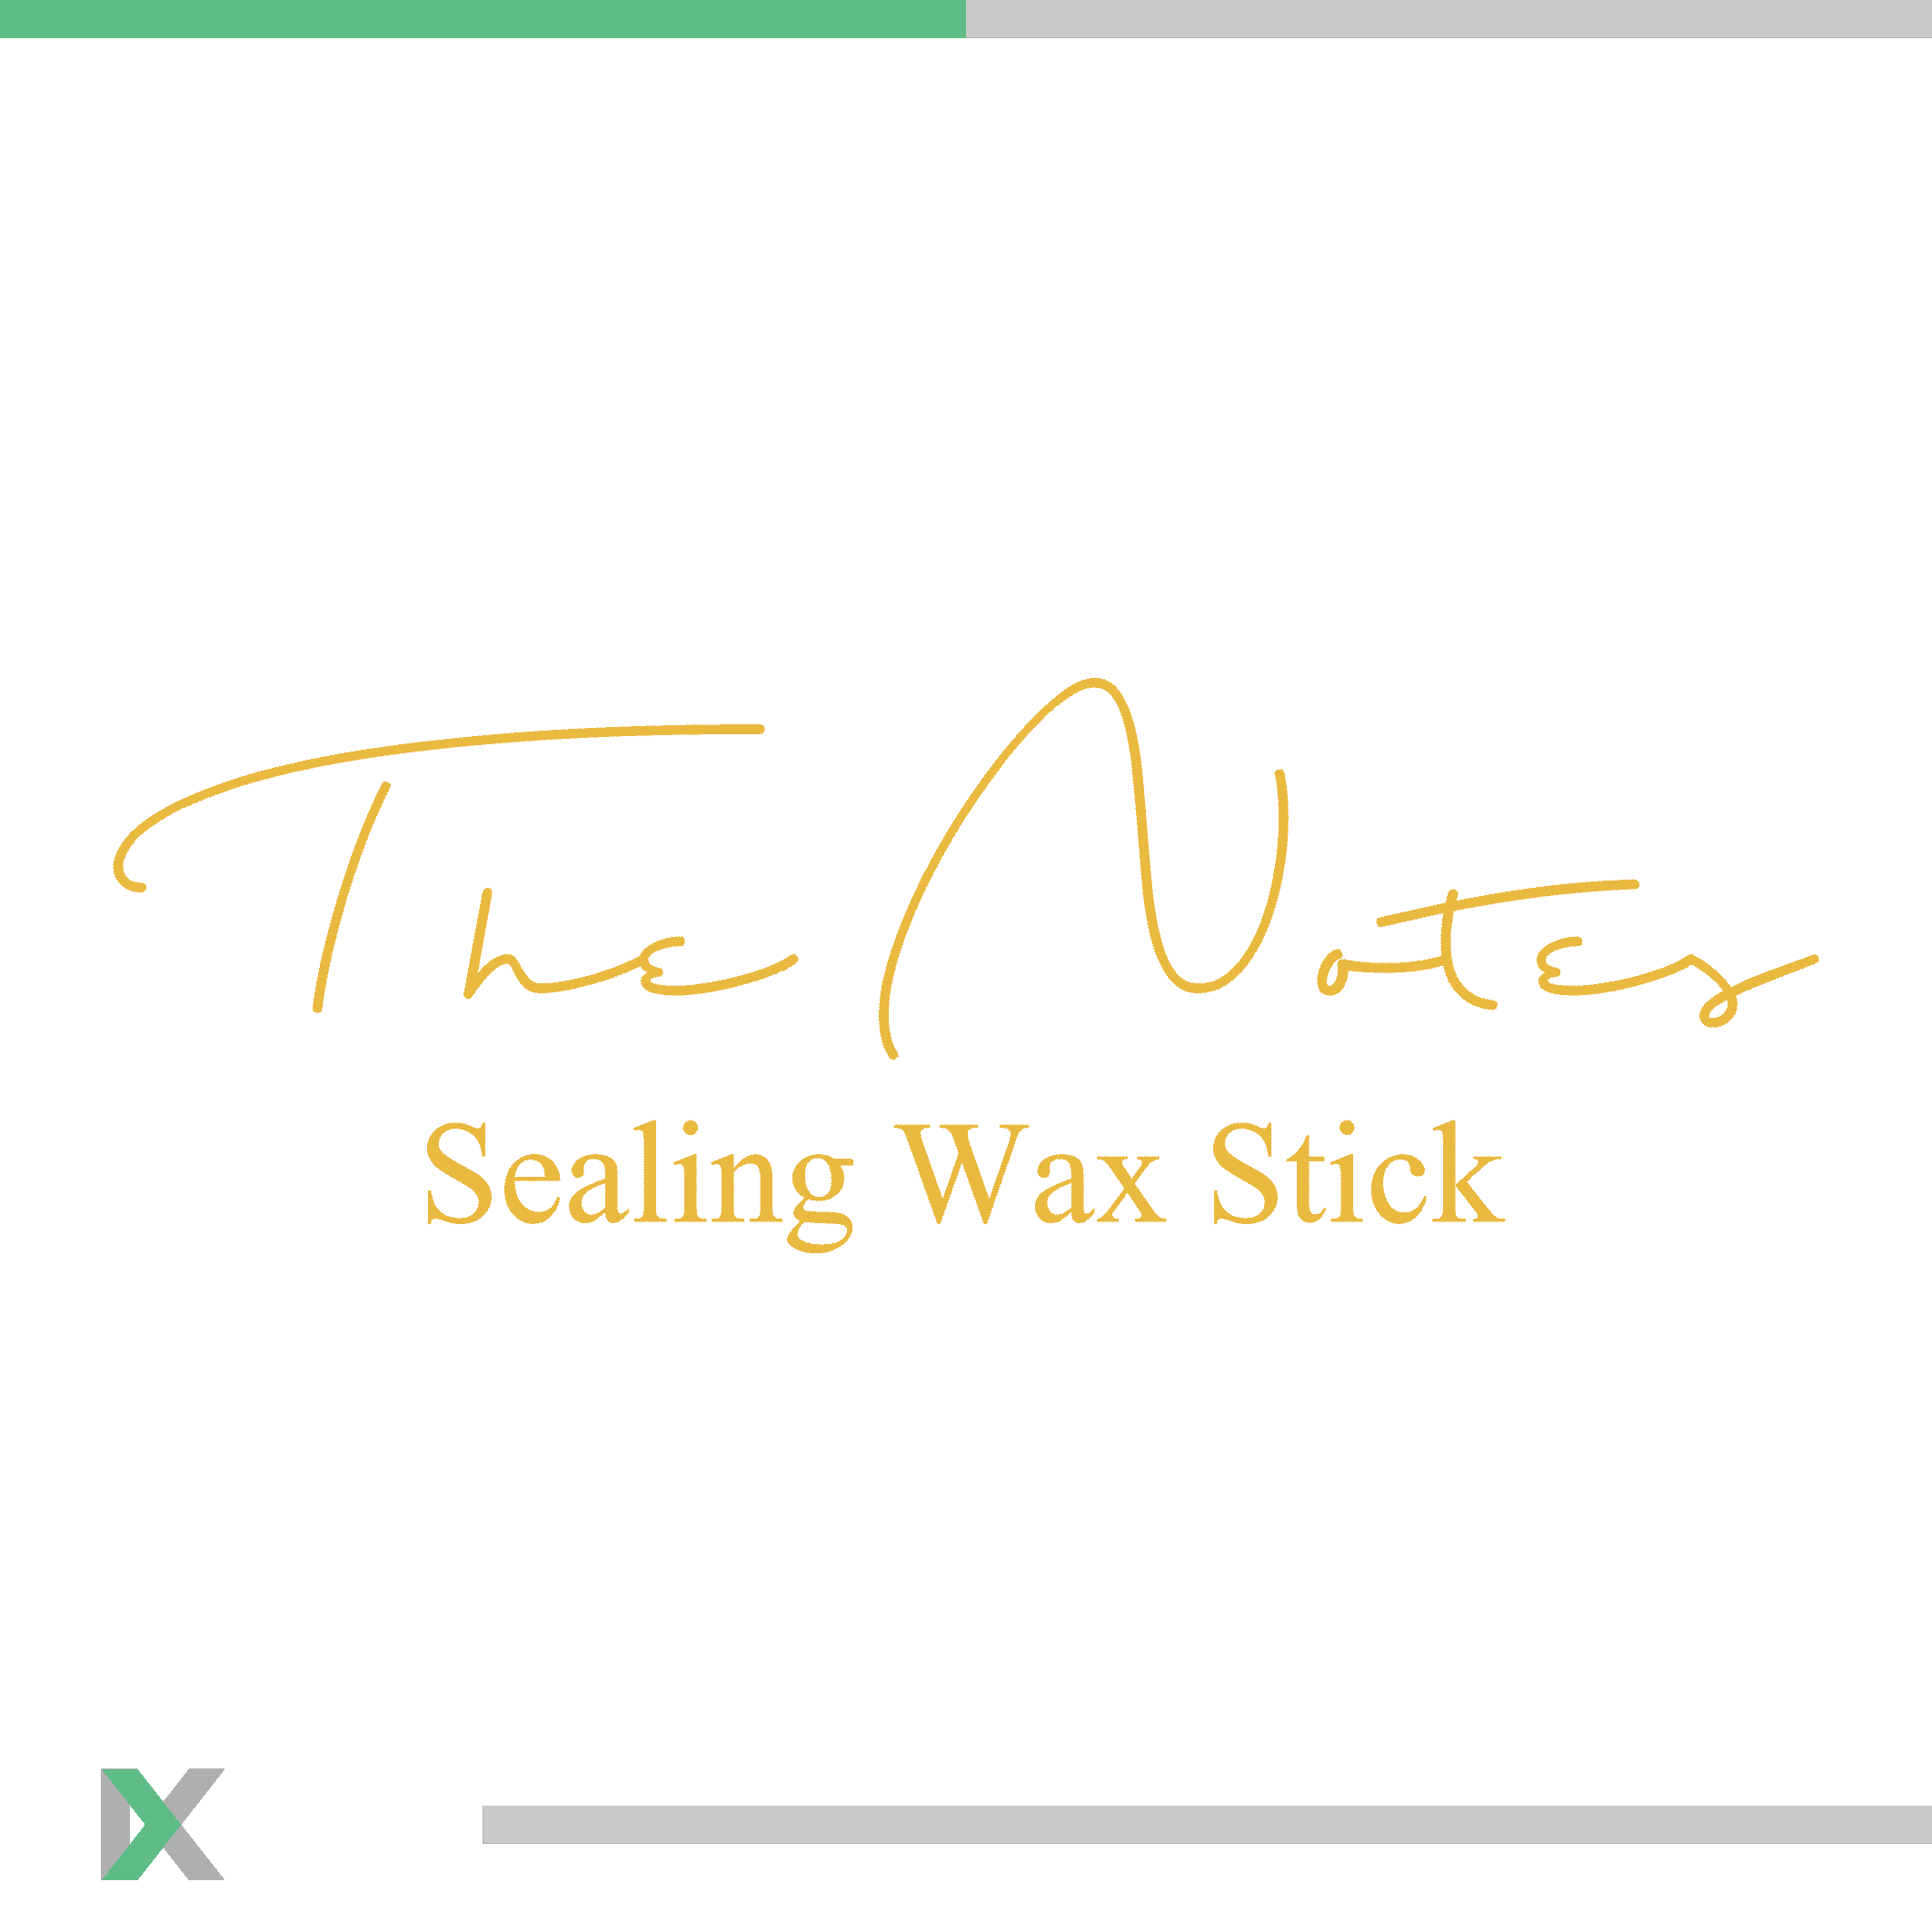 The Notes Sealing Wax Stick logo